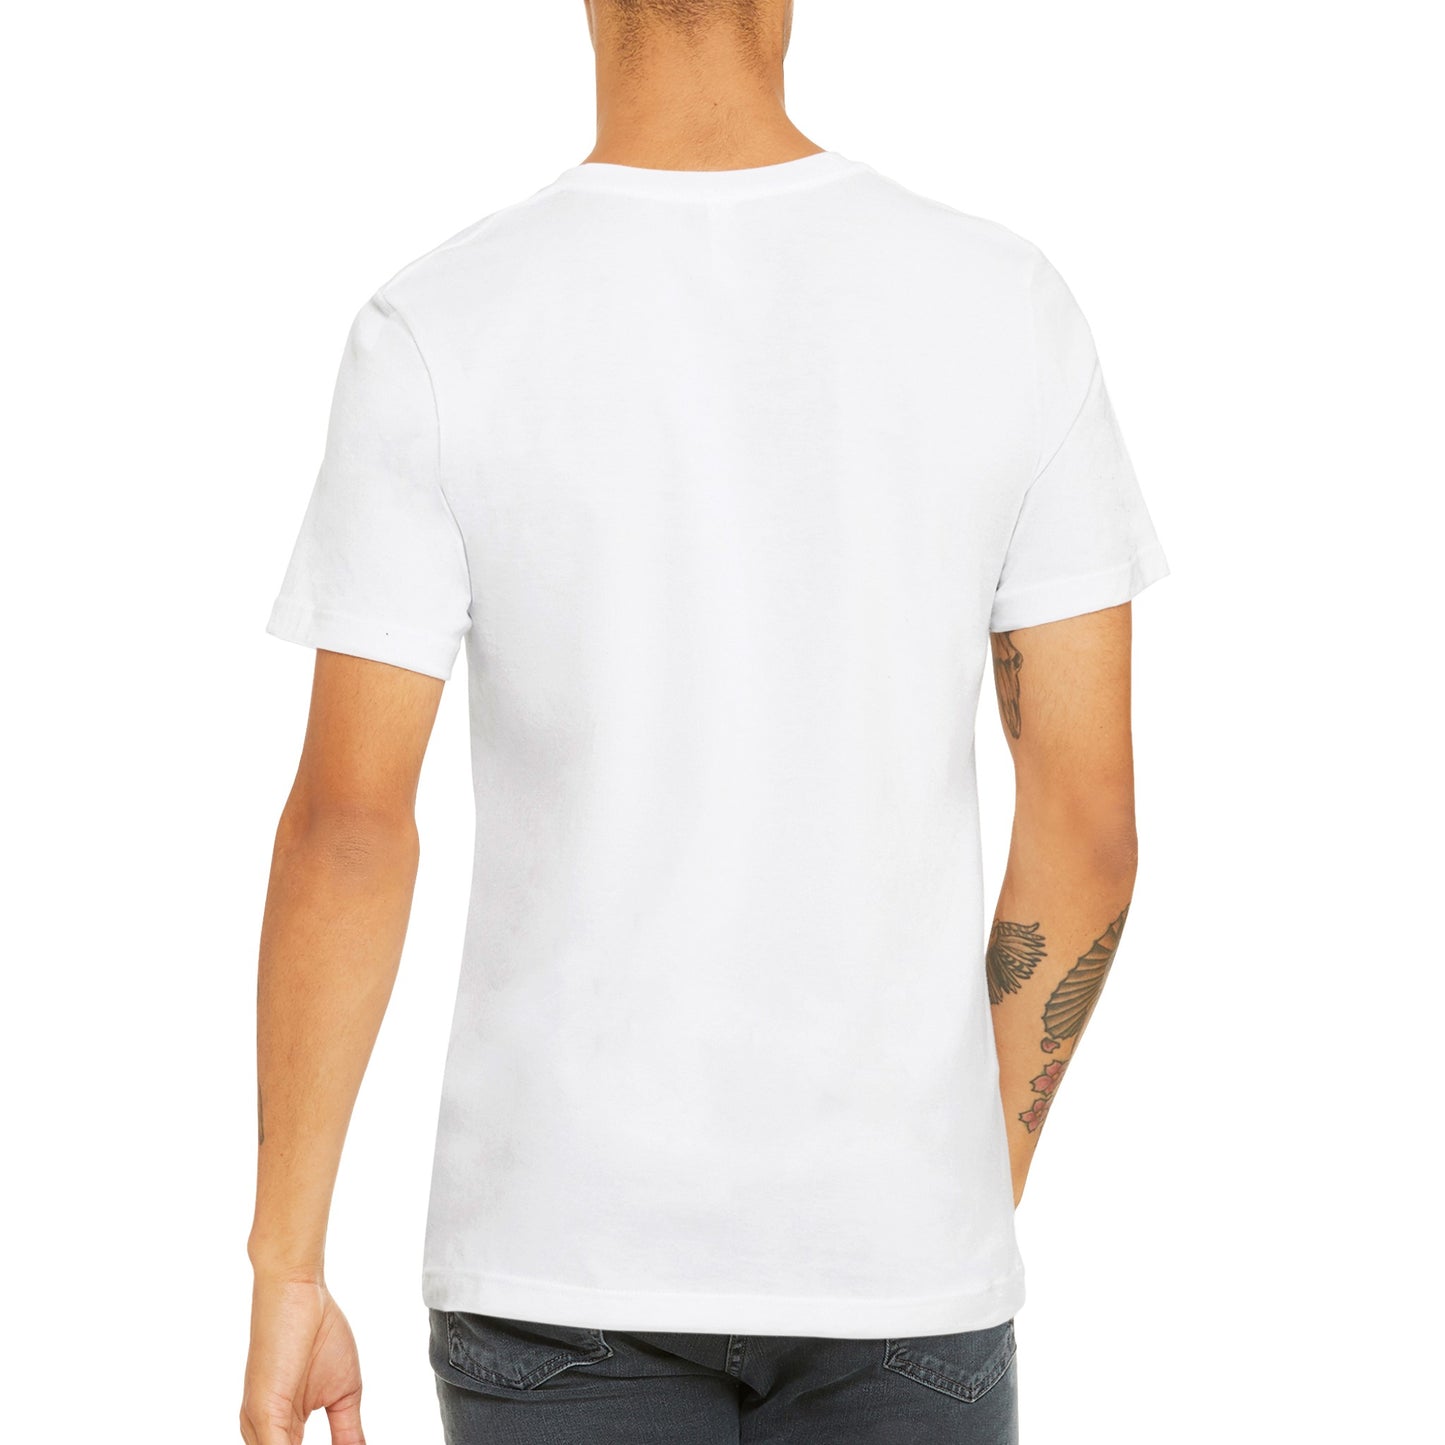 Lalalalala - Premium Männer / Unisex T-Shirt mit Rundhalsausschnitt